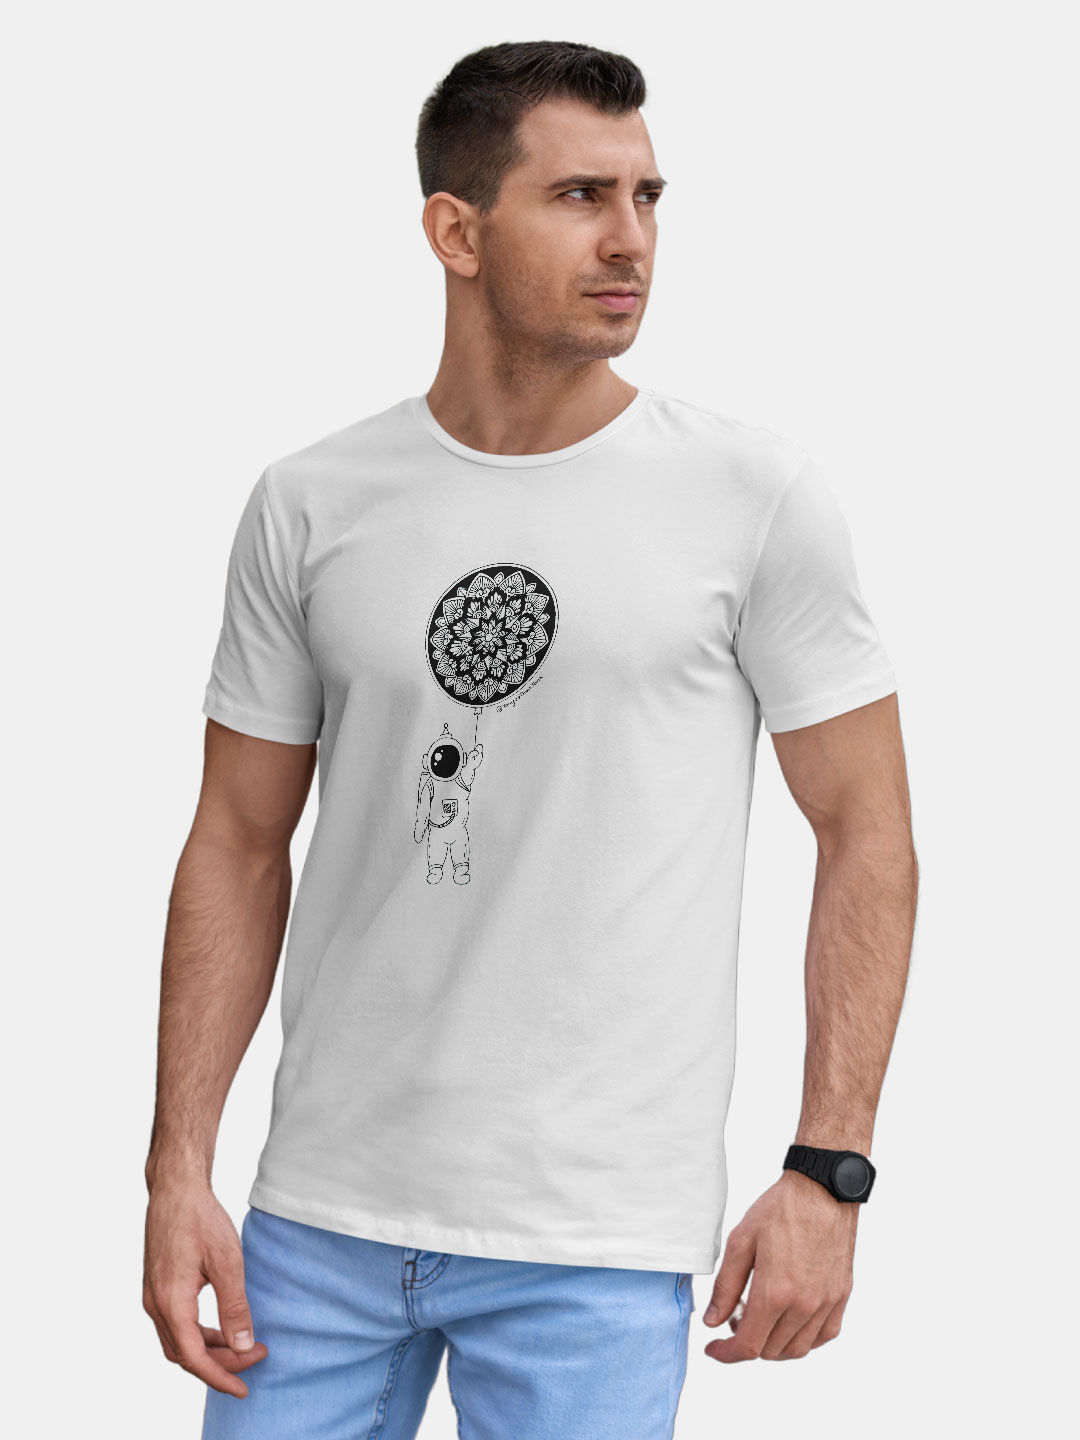 Buy Astronaut White - Male Designer T-Shirts T-Shirts Online